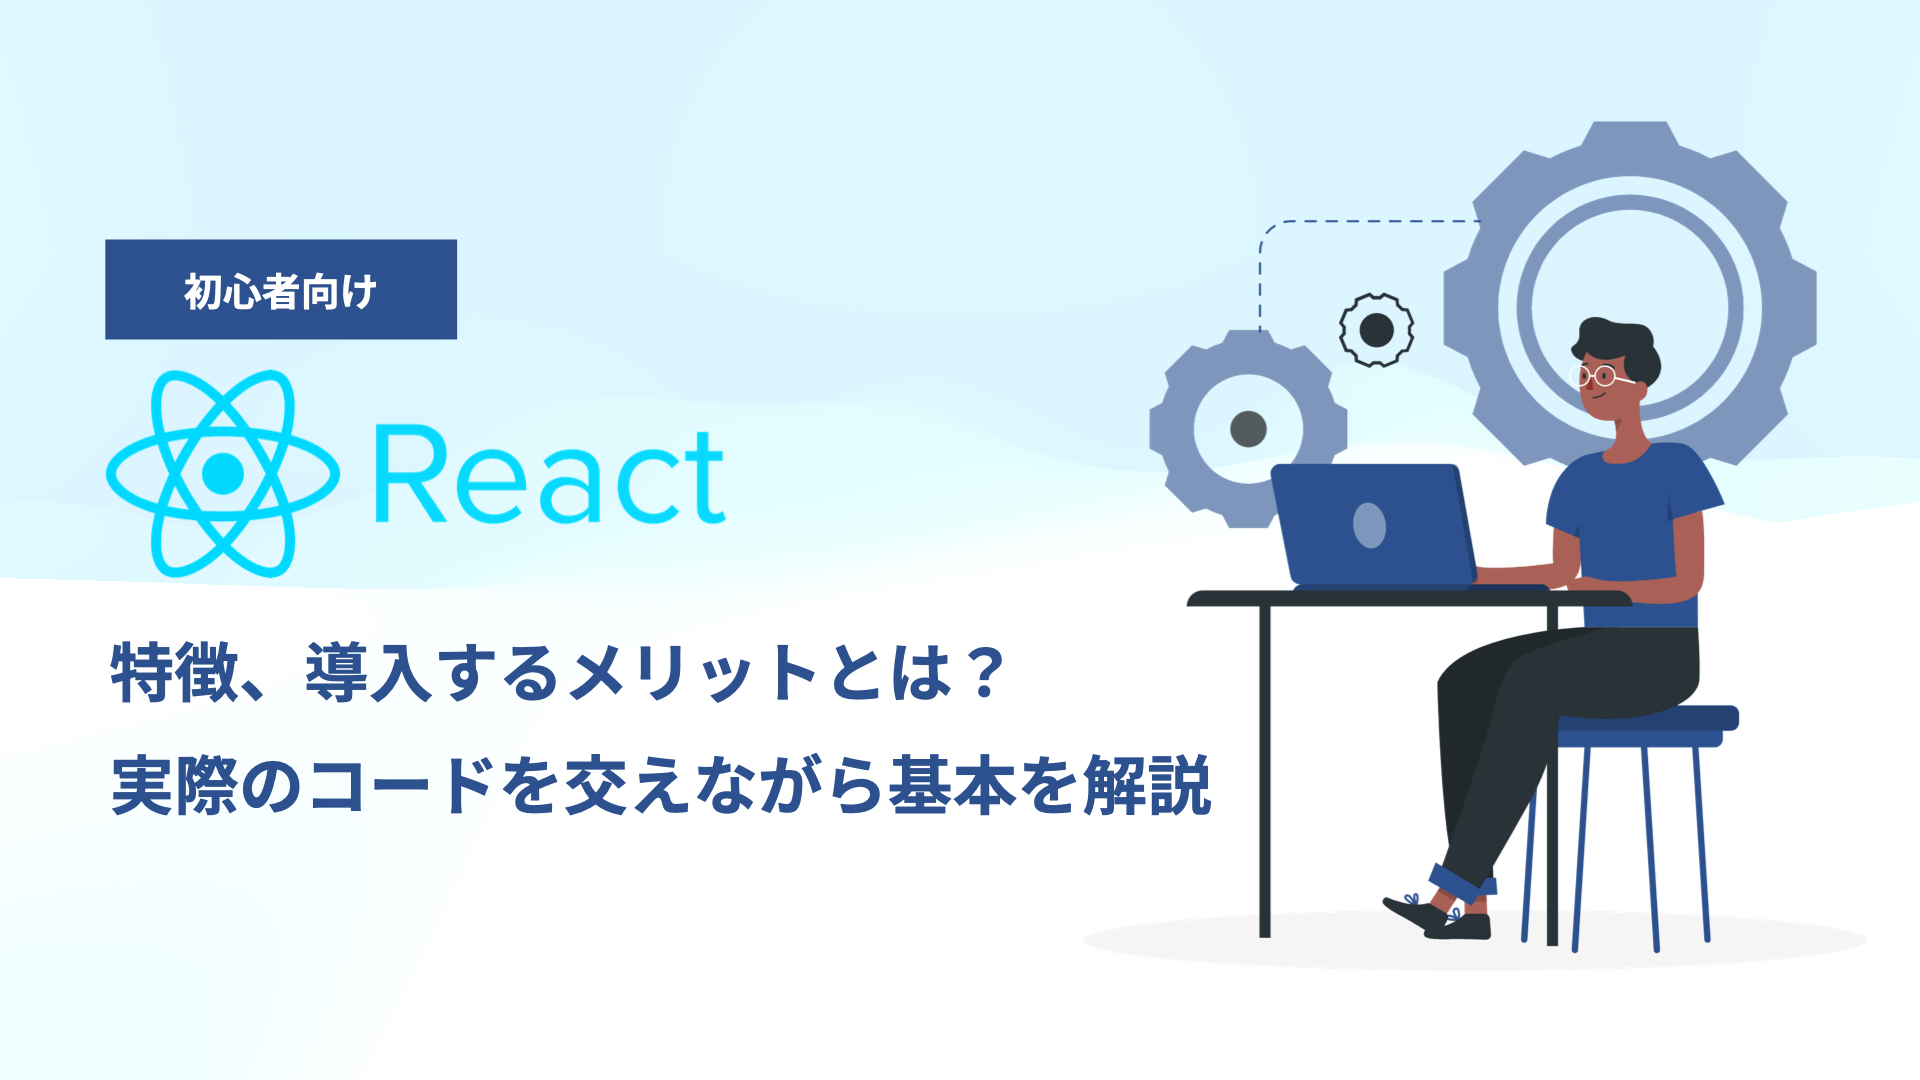 Reactとは？メリット・デメリット基本的な書き方、開発事例を解説